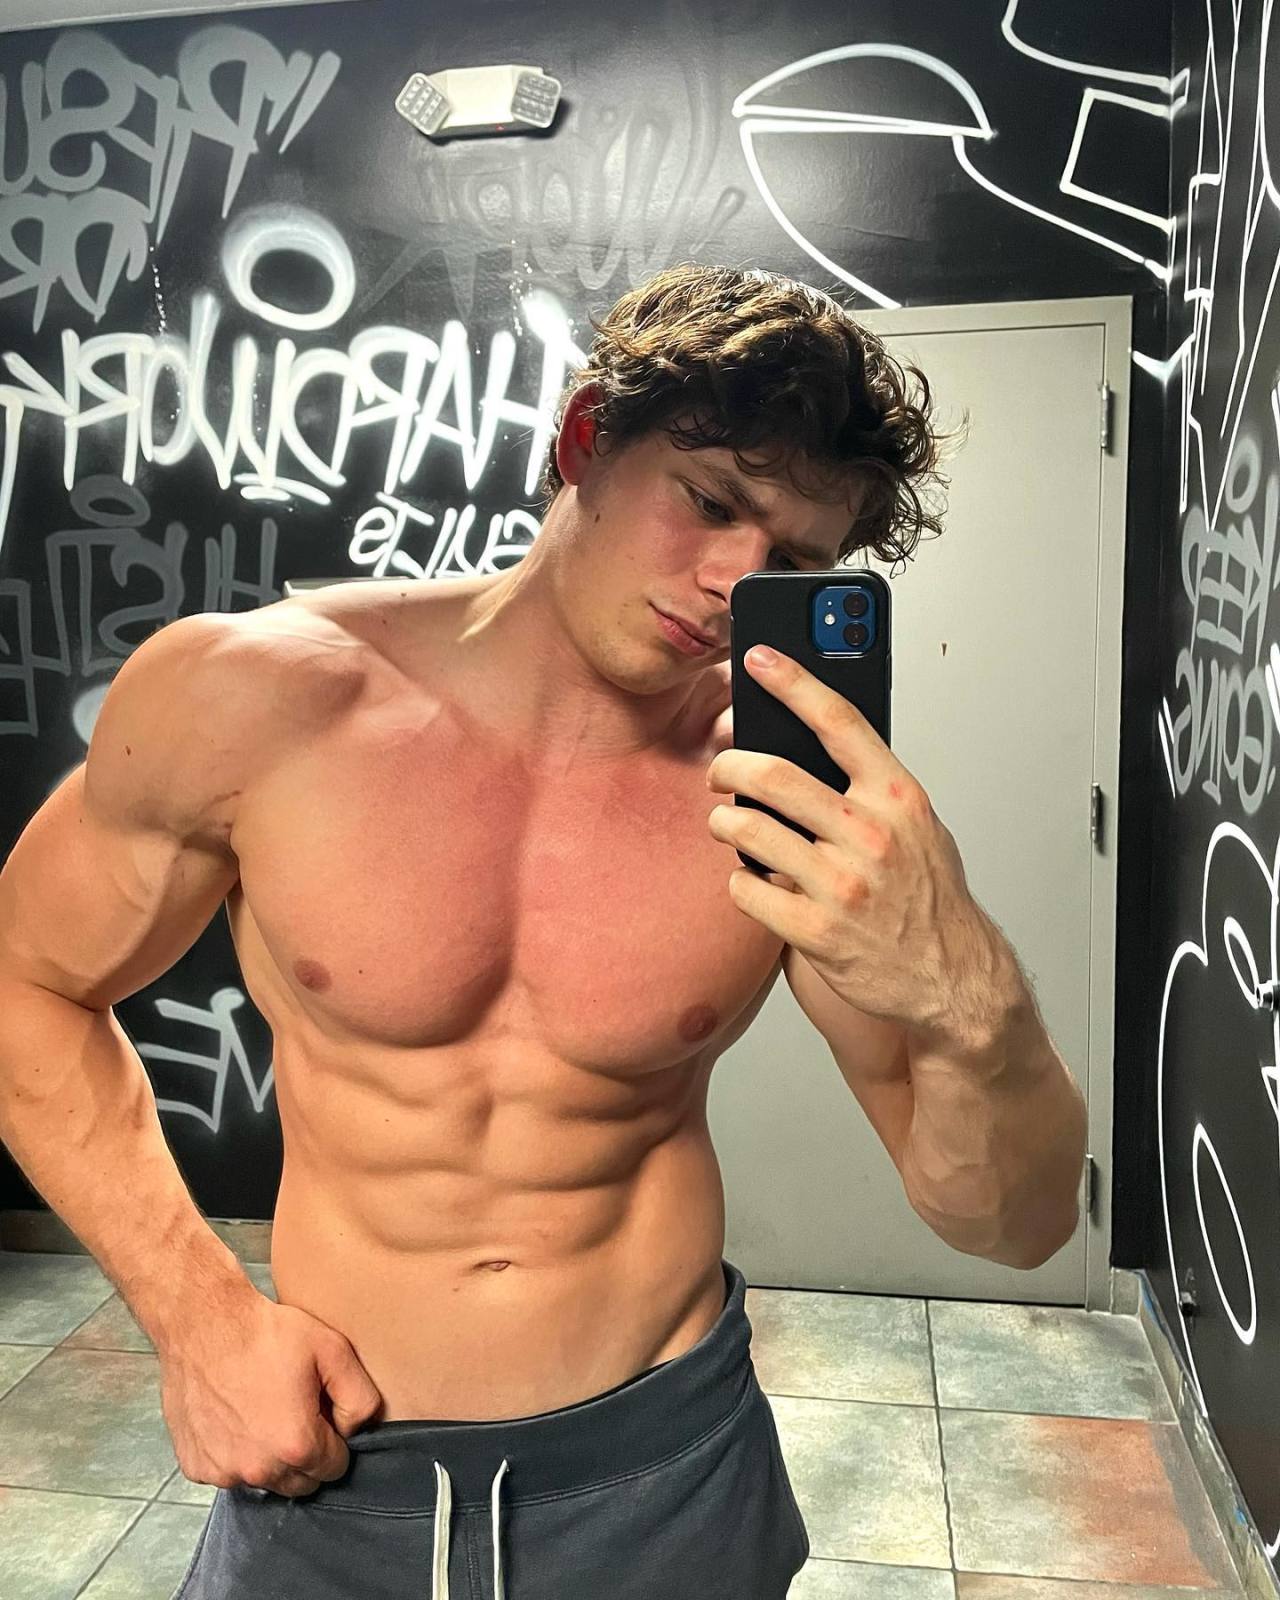 strong-young-shirtless-guy-julian-ryerson-teen-muscle-hunk-selfie